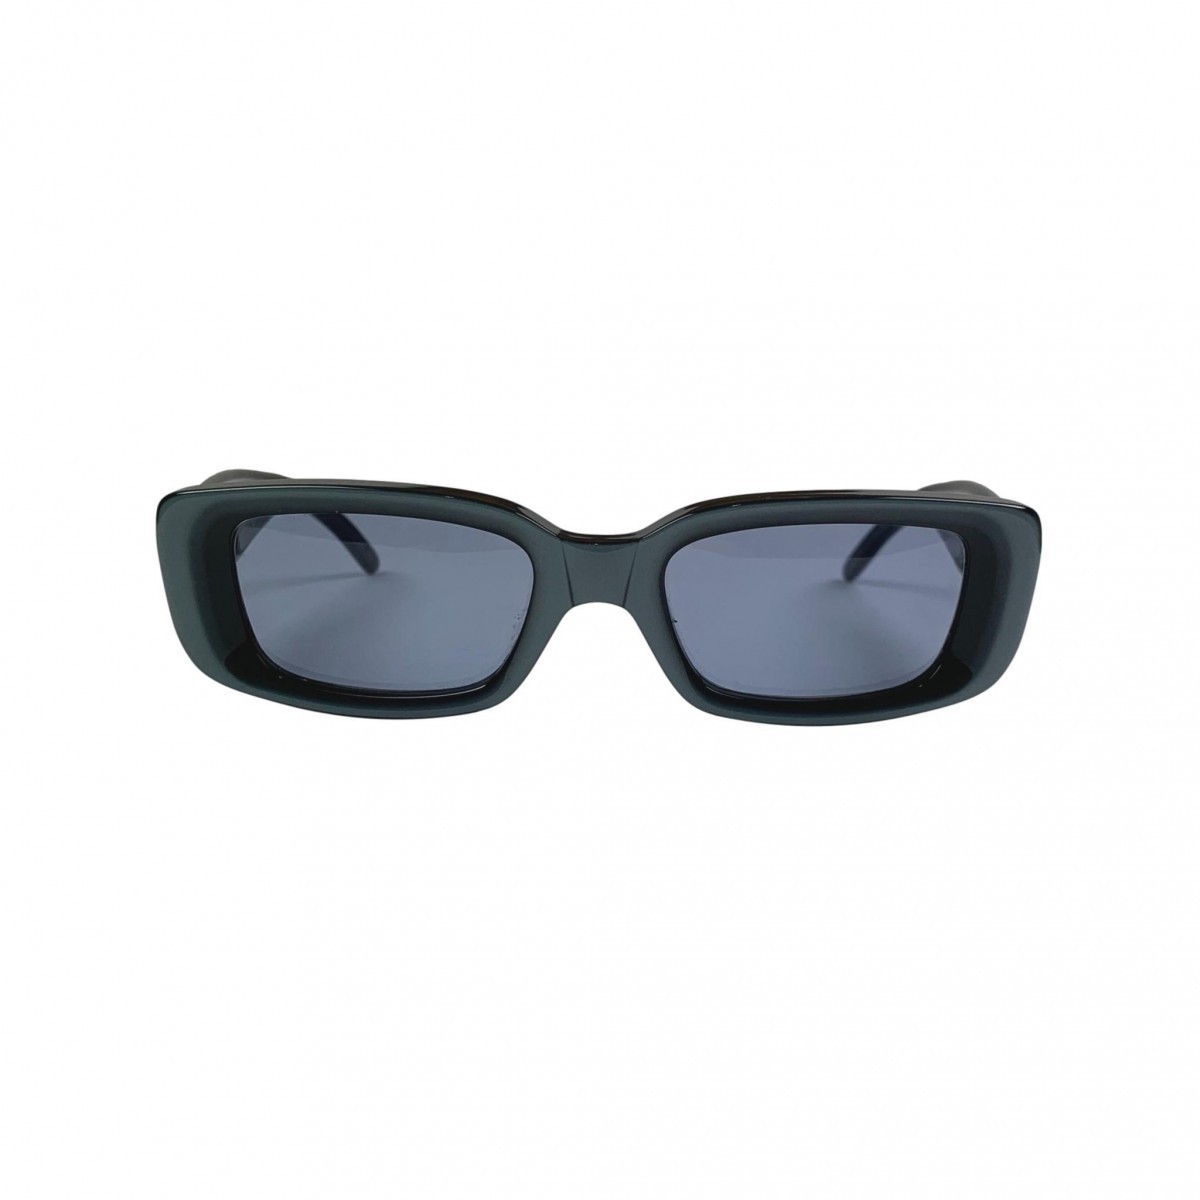 Moda Style Sunglasses - 2